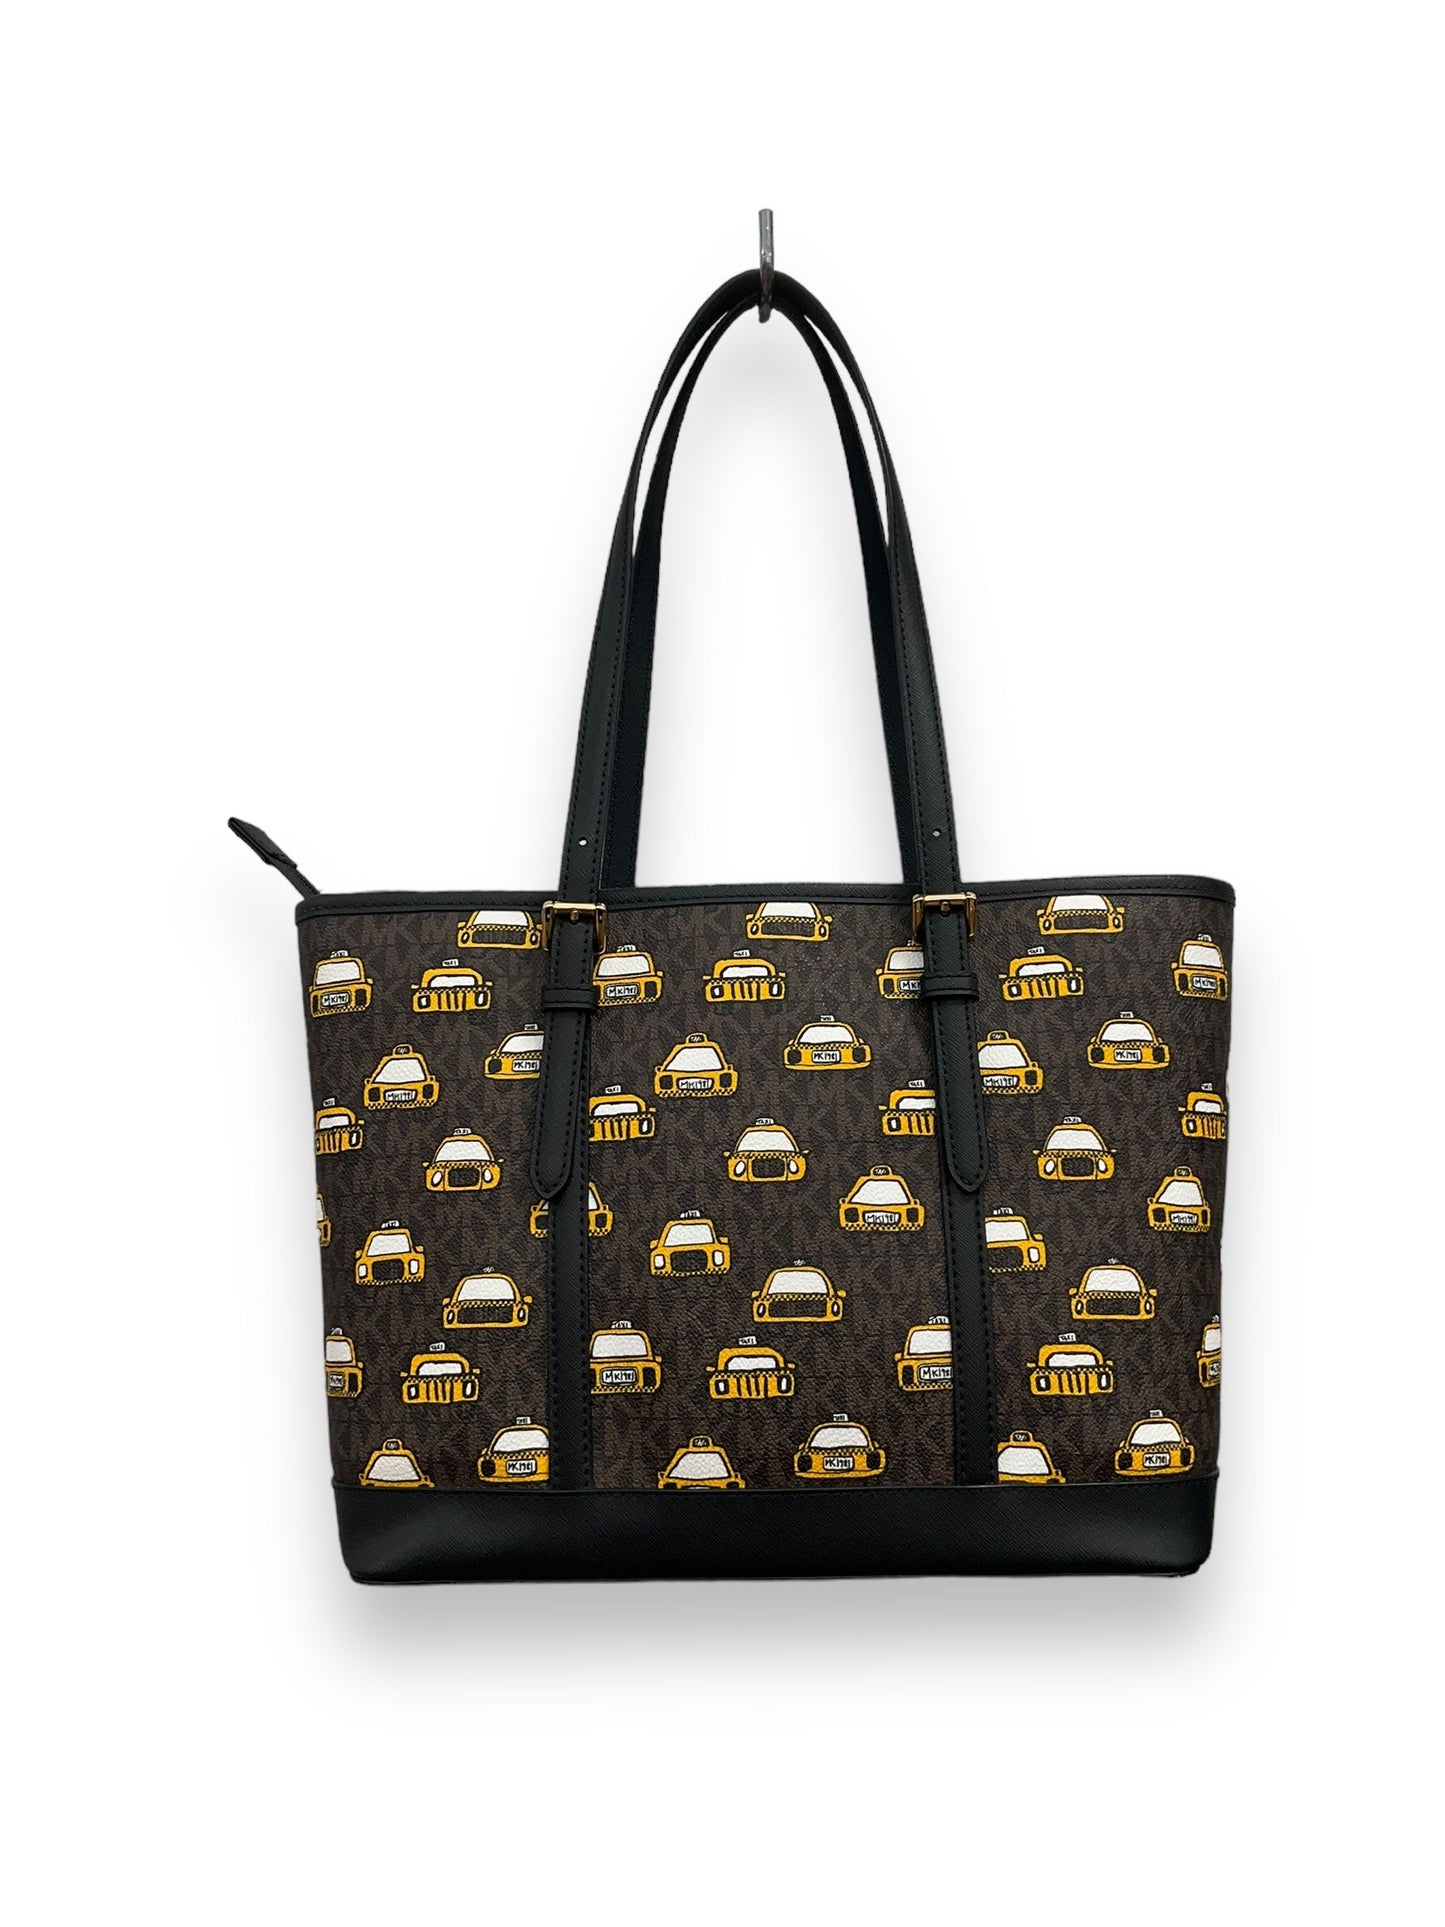 Brown & Yellow Handbag Designer Michael Kors, Size Medium